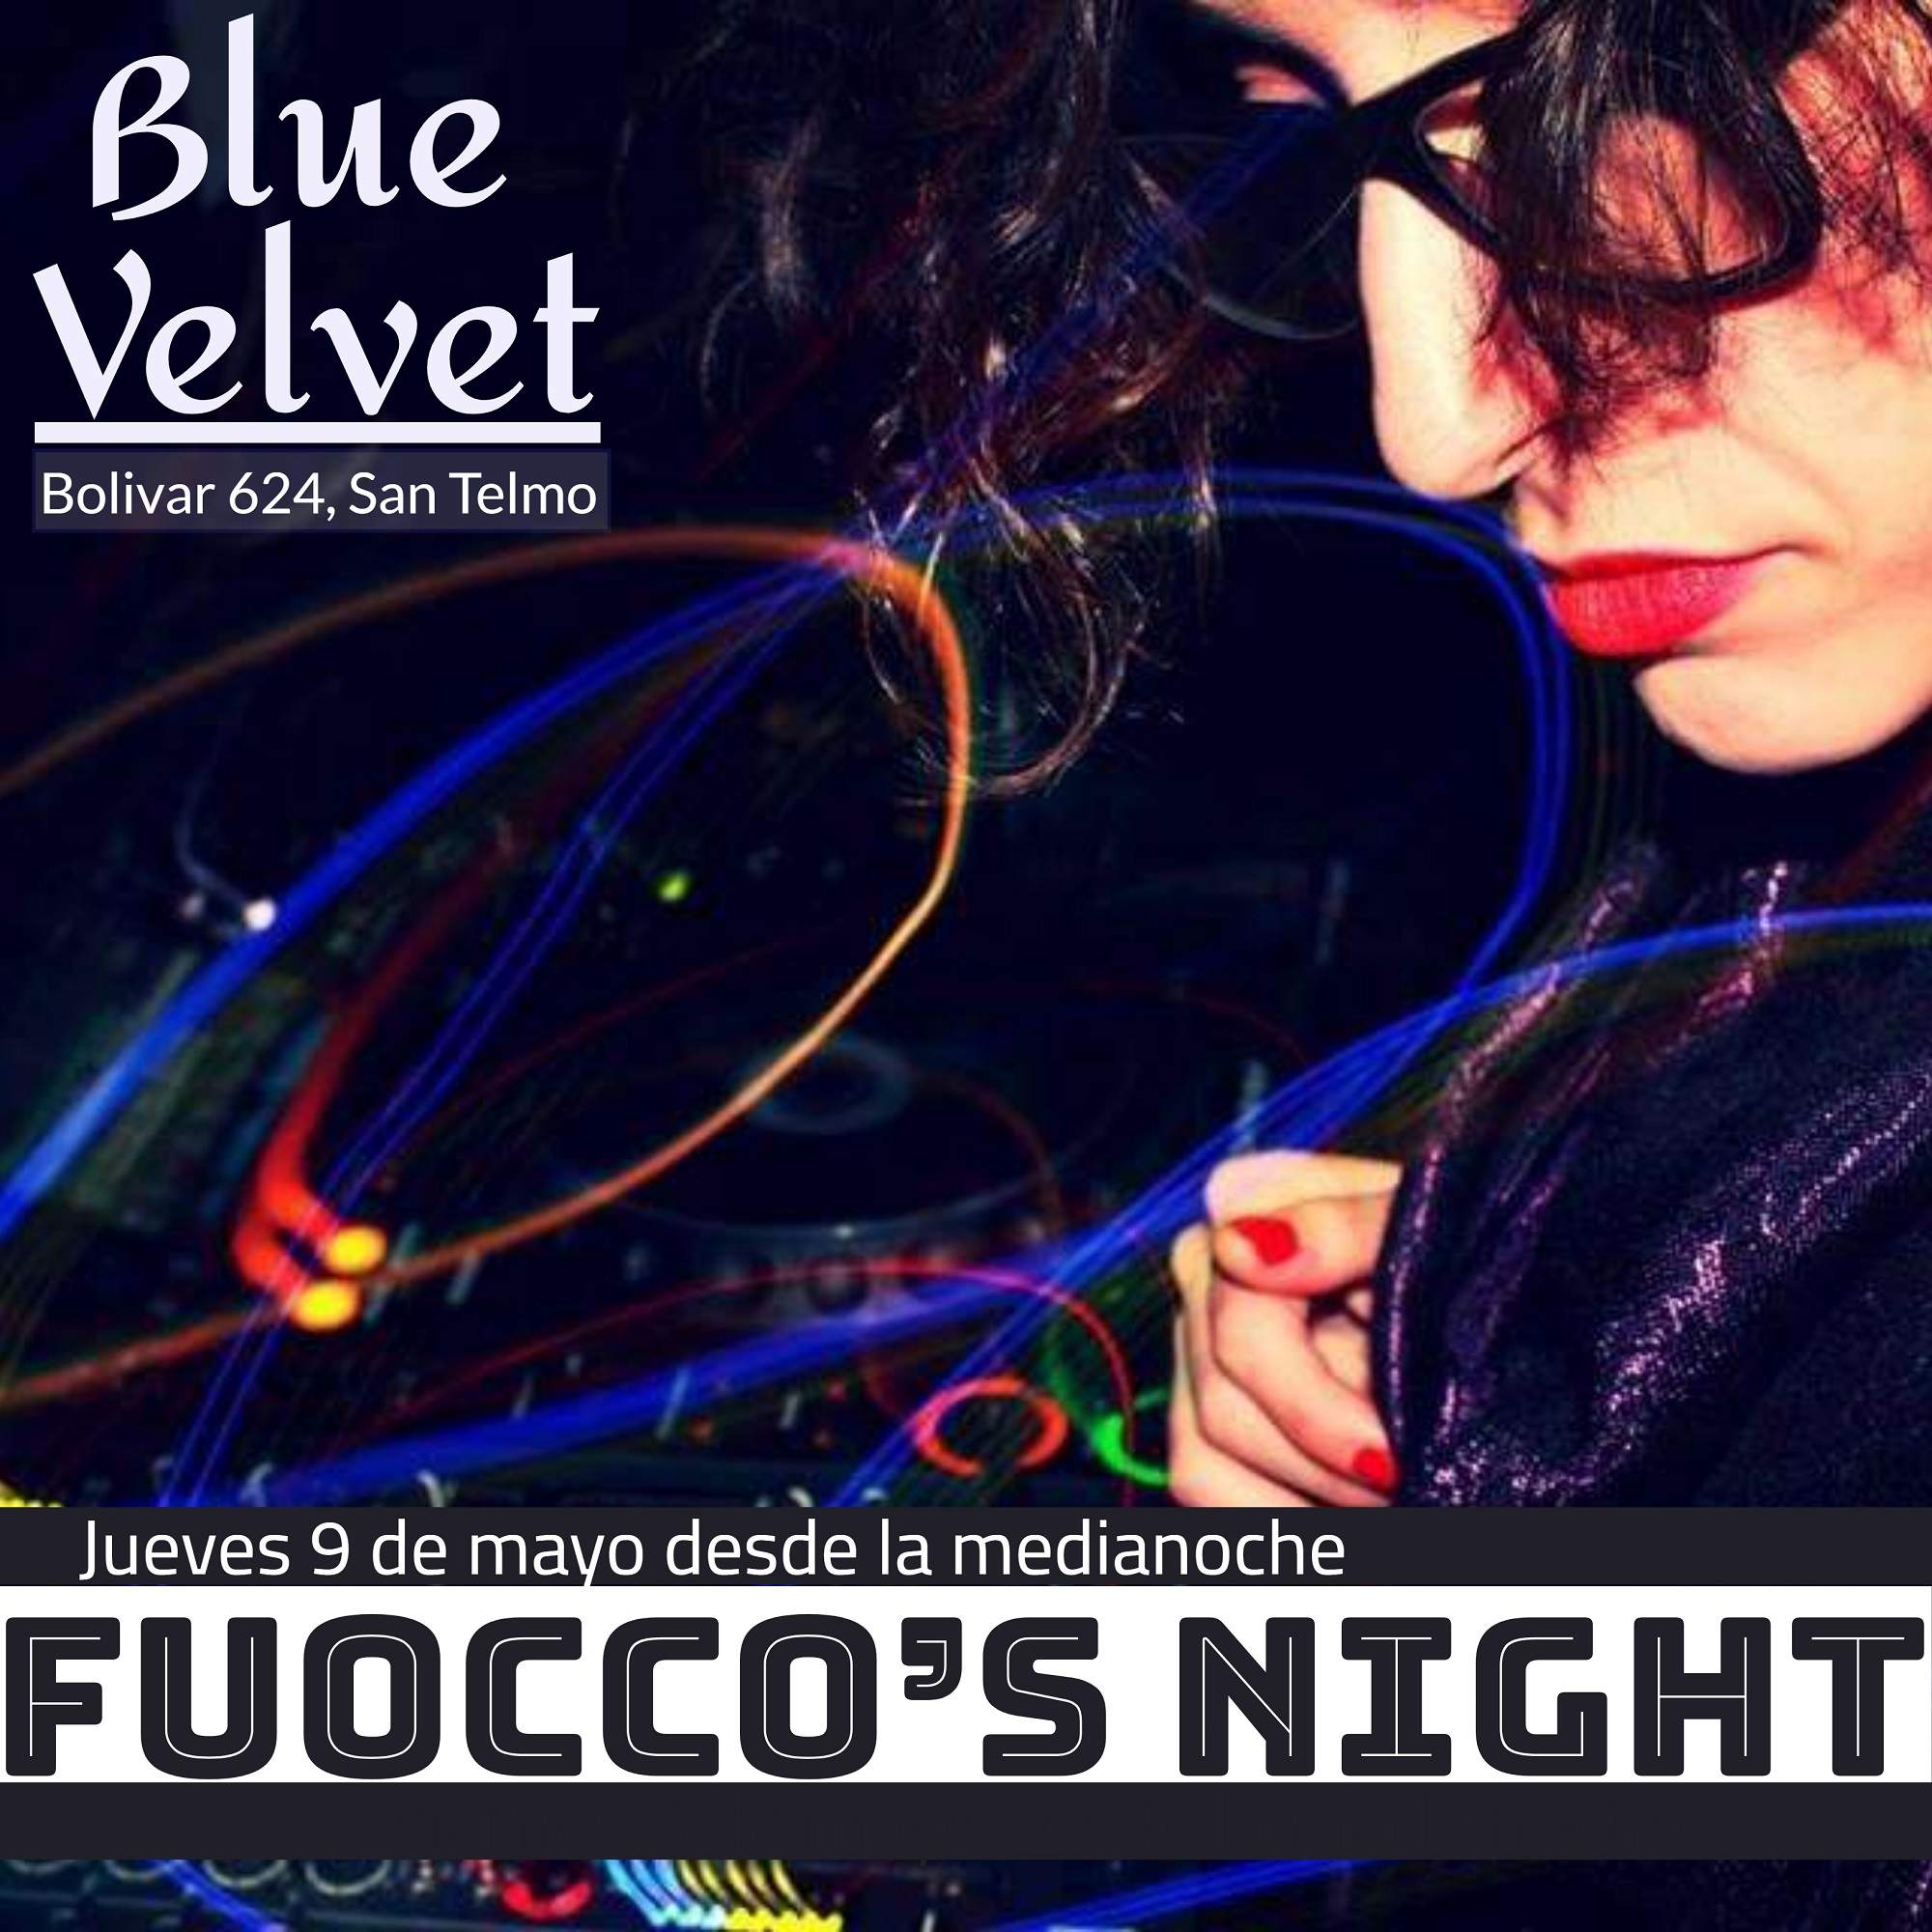 Fuocco's NIGHT - Página frontal